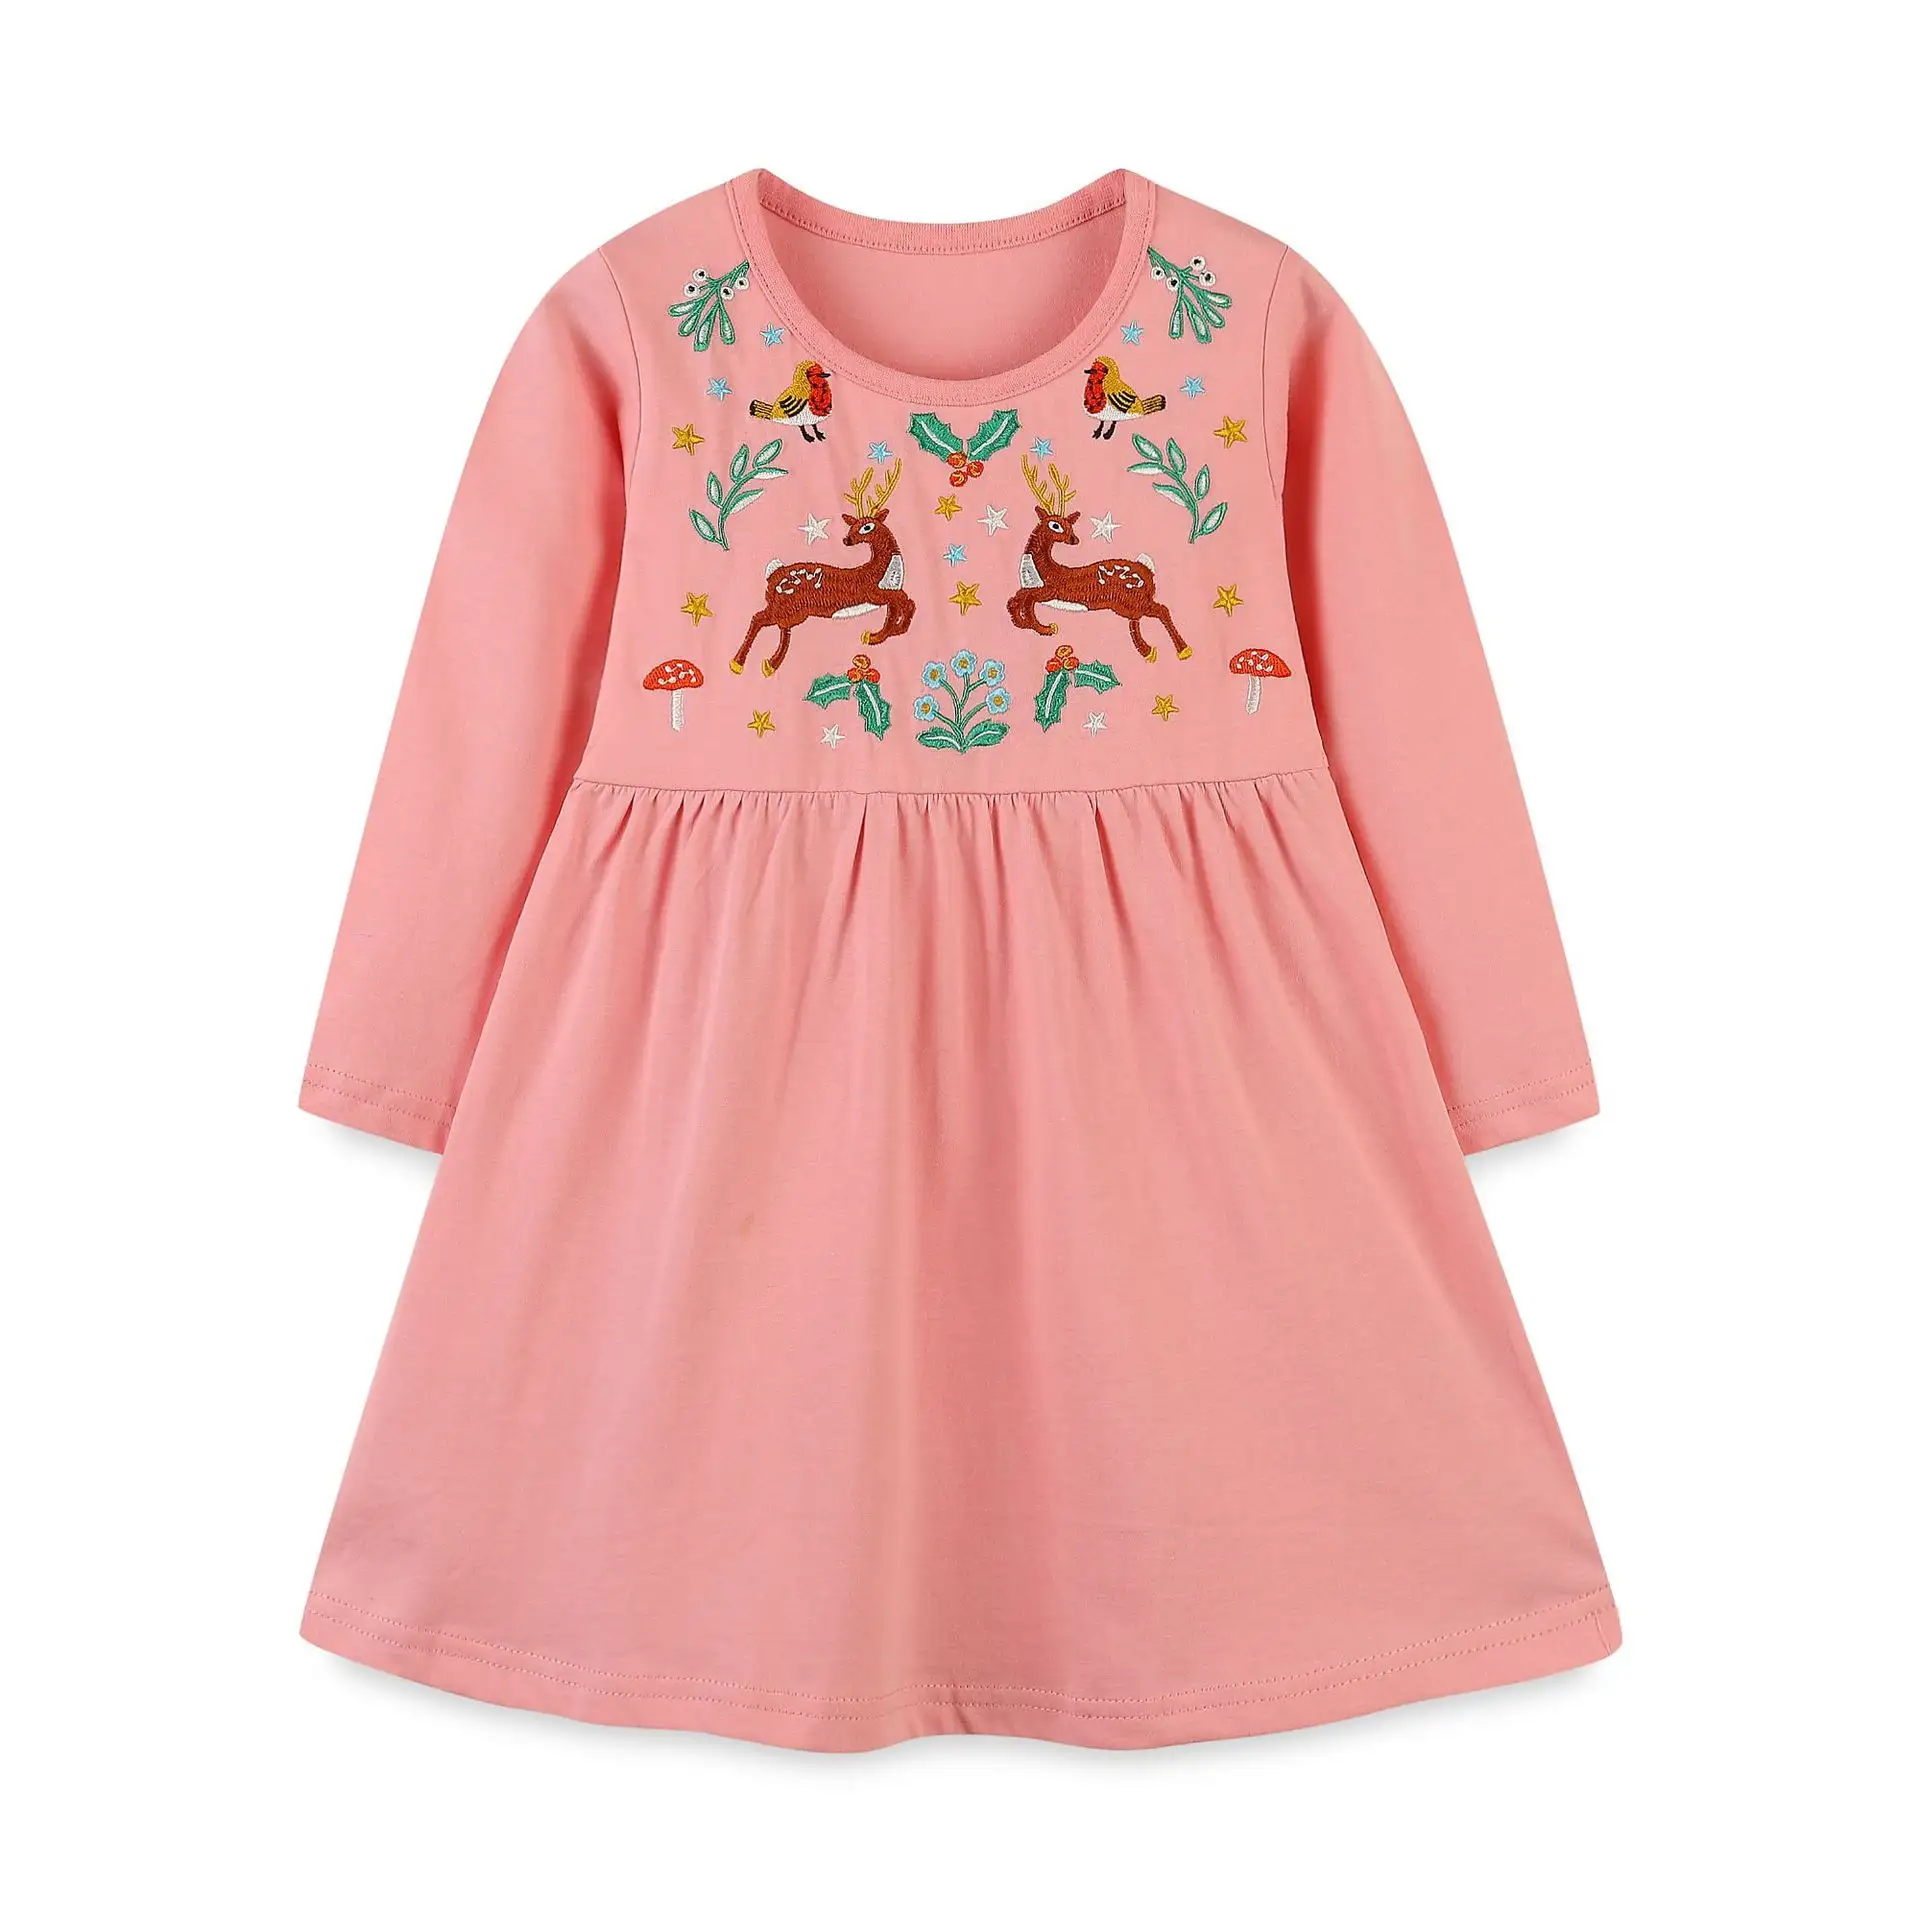 FuYu Top Fashion Little Girls Sweet Cute Long Sleeves Embroidery Animal Pattern Cotton O-Neck Princess Dress